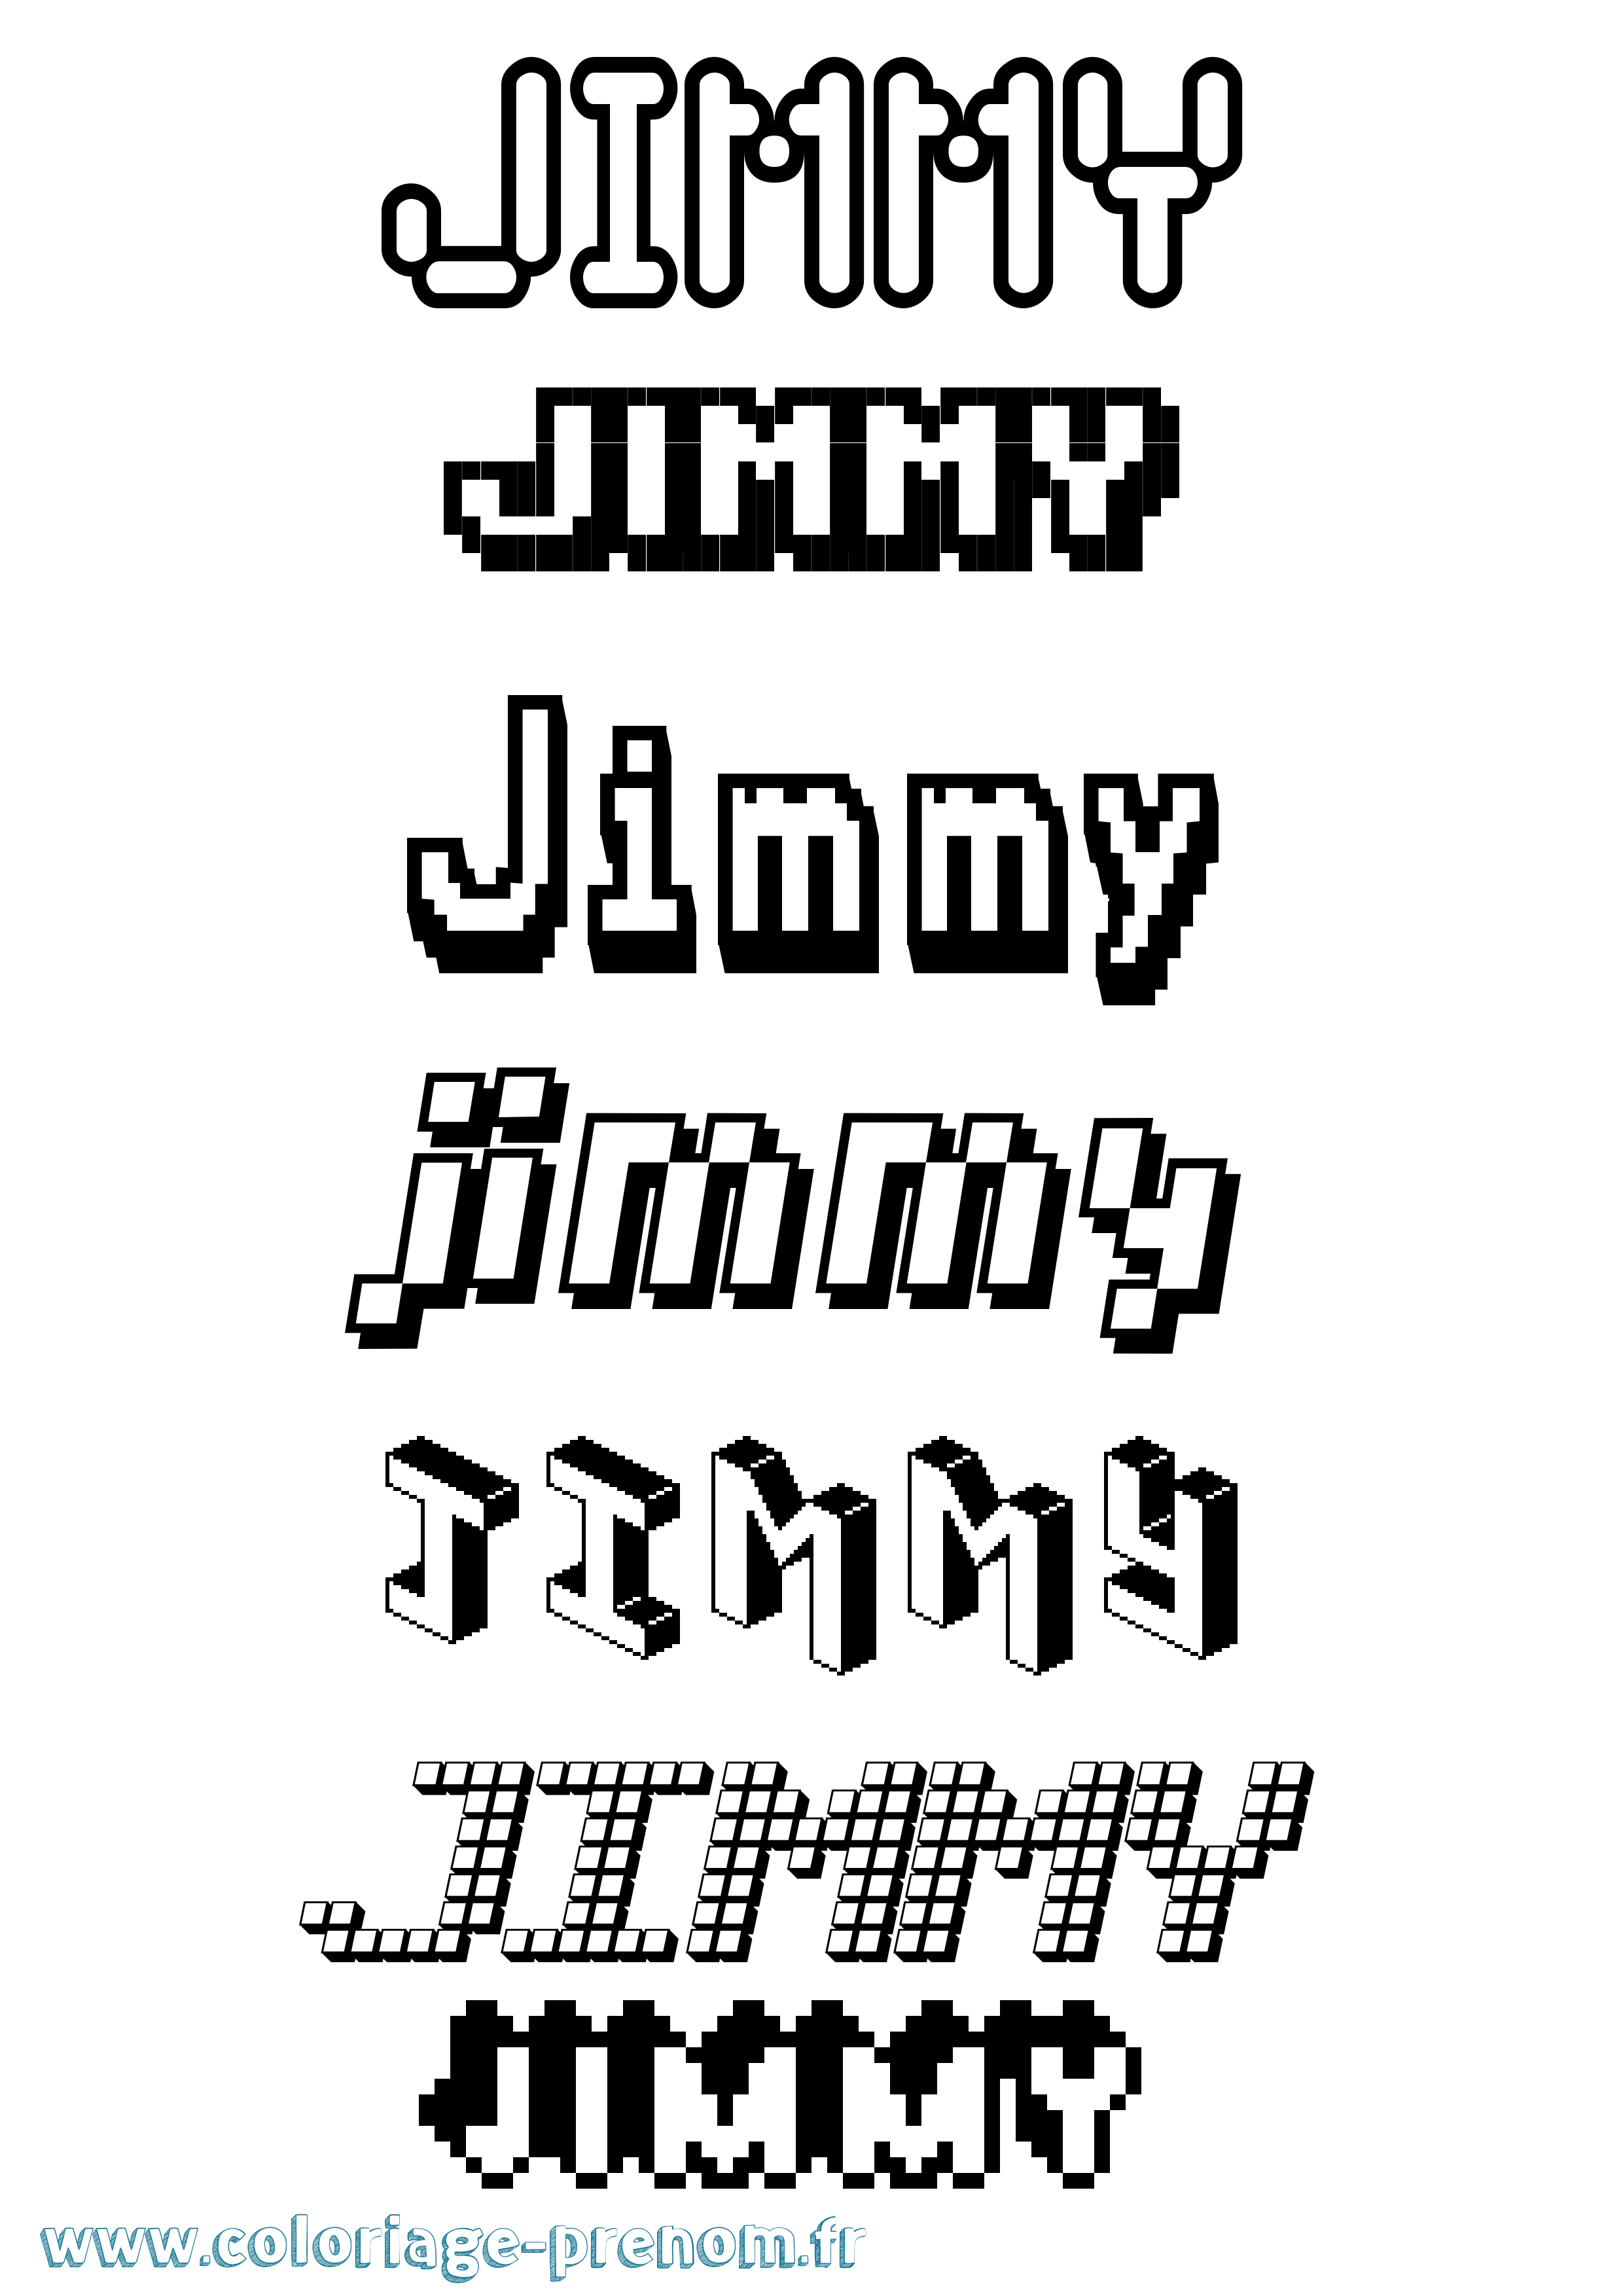 Coloriage prénom Jimmy Pixel